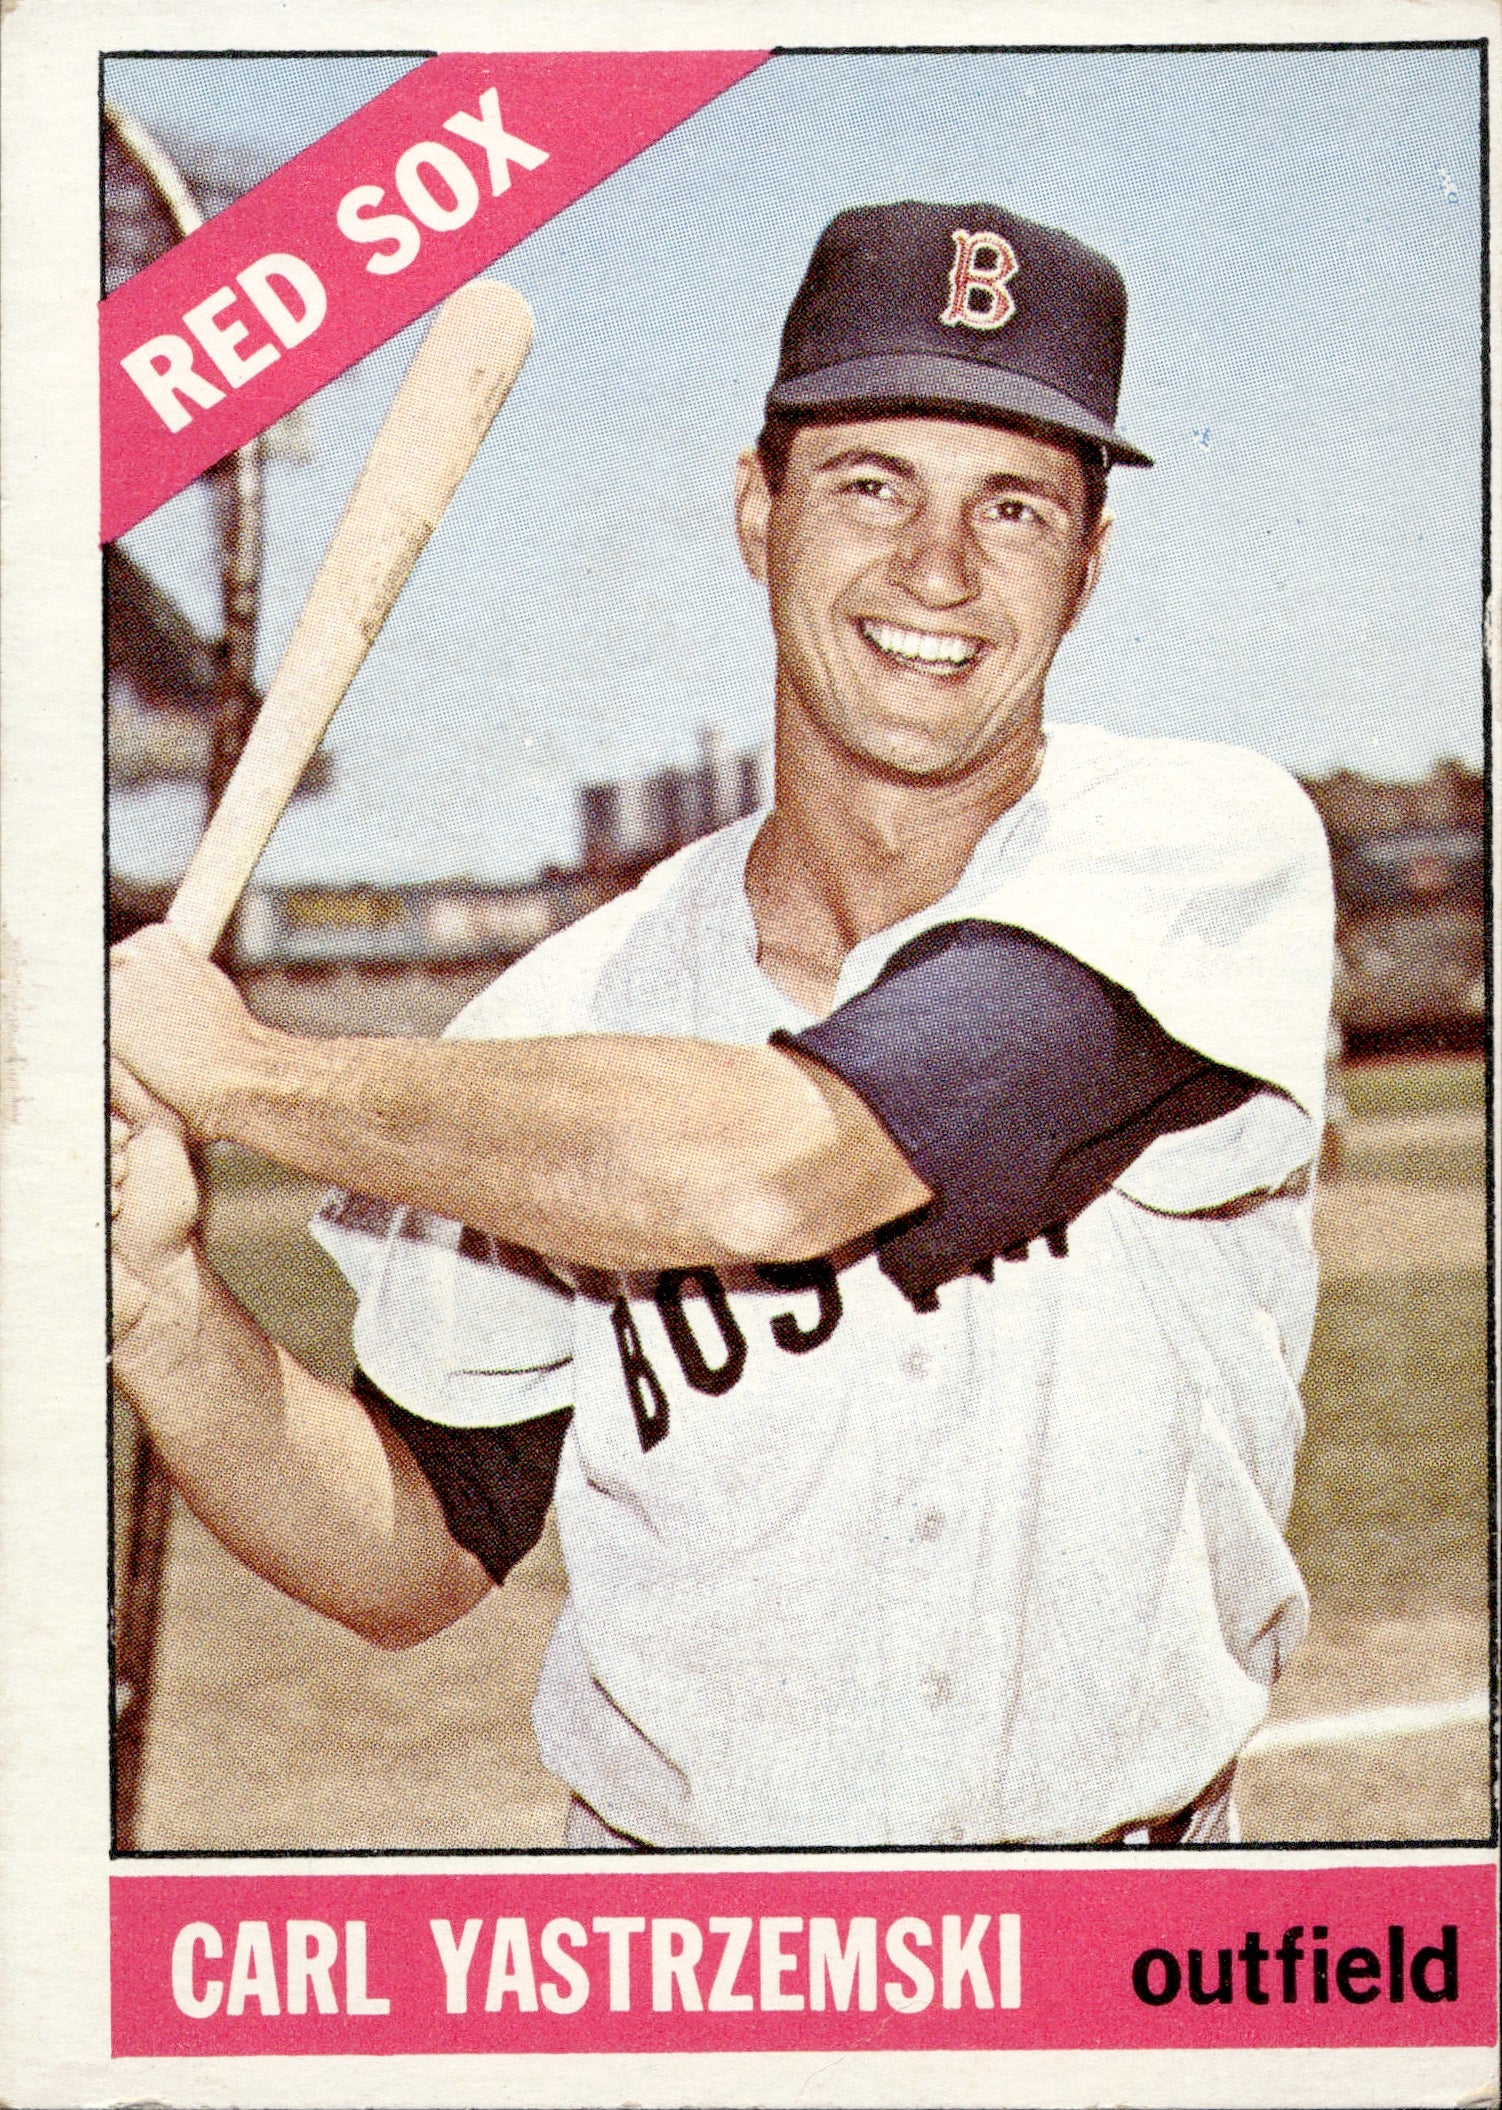 1966 Carl Yastrzemski Topps #70 Boston Red Sox BV $120 3